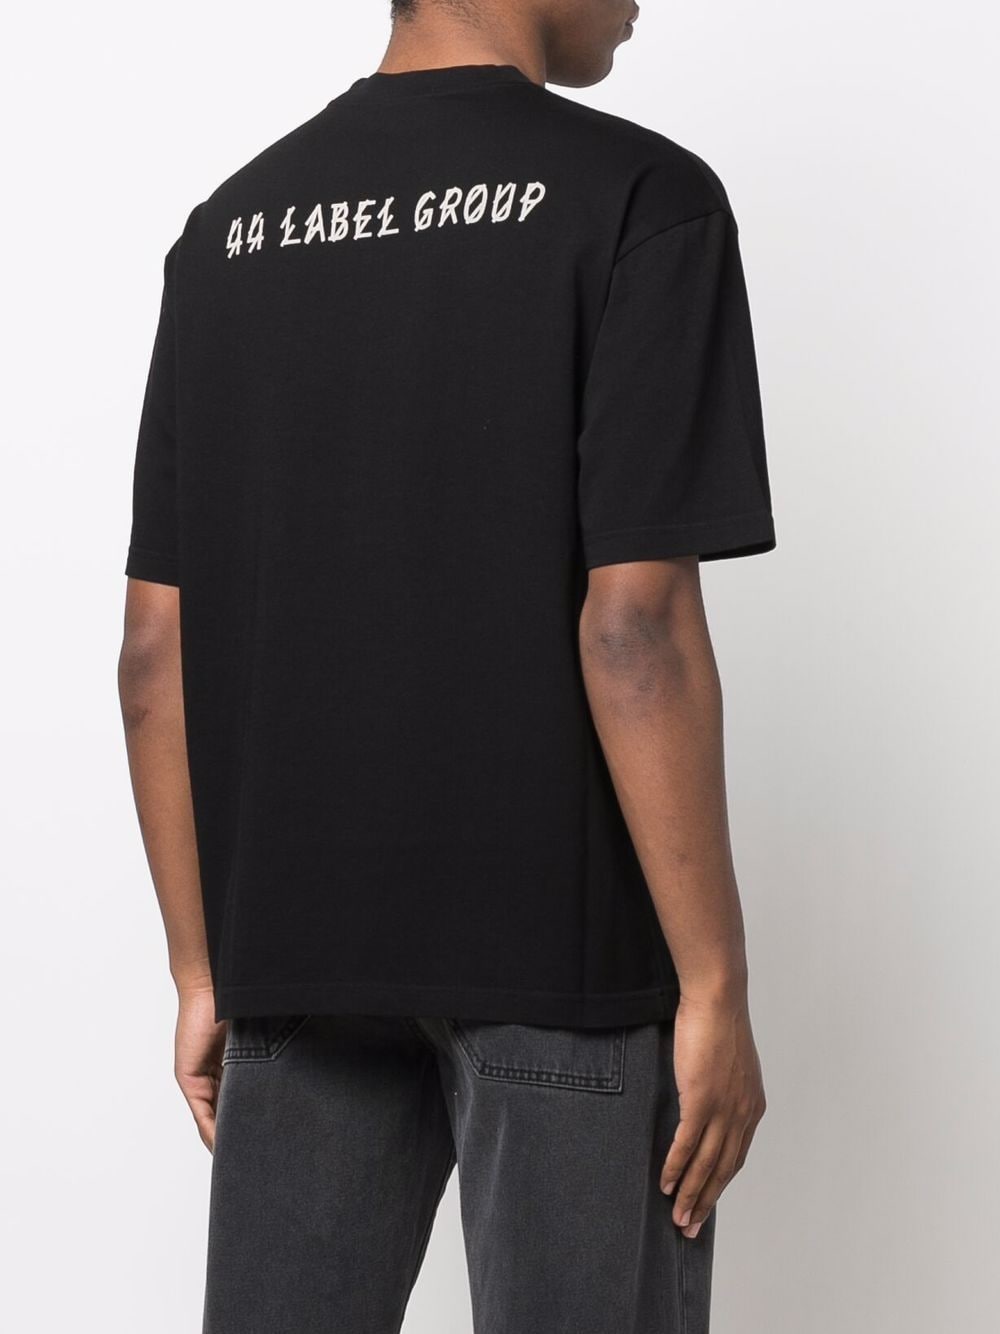 фото 44 label group футболка с принтом